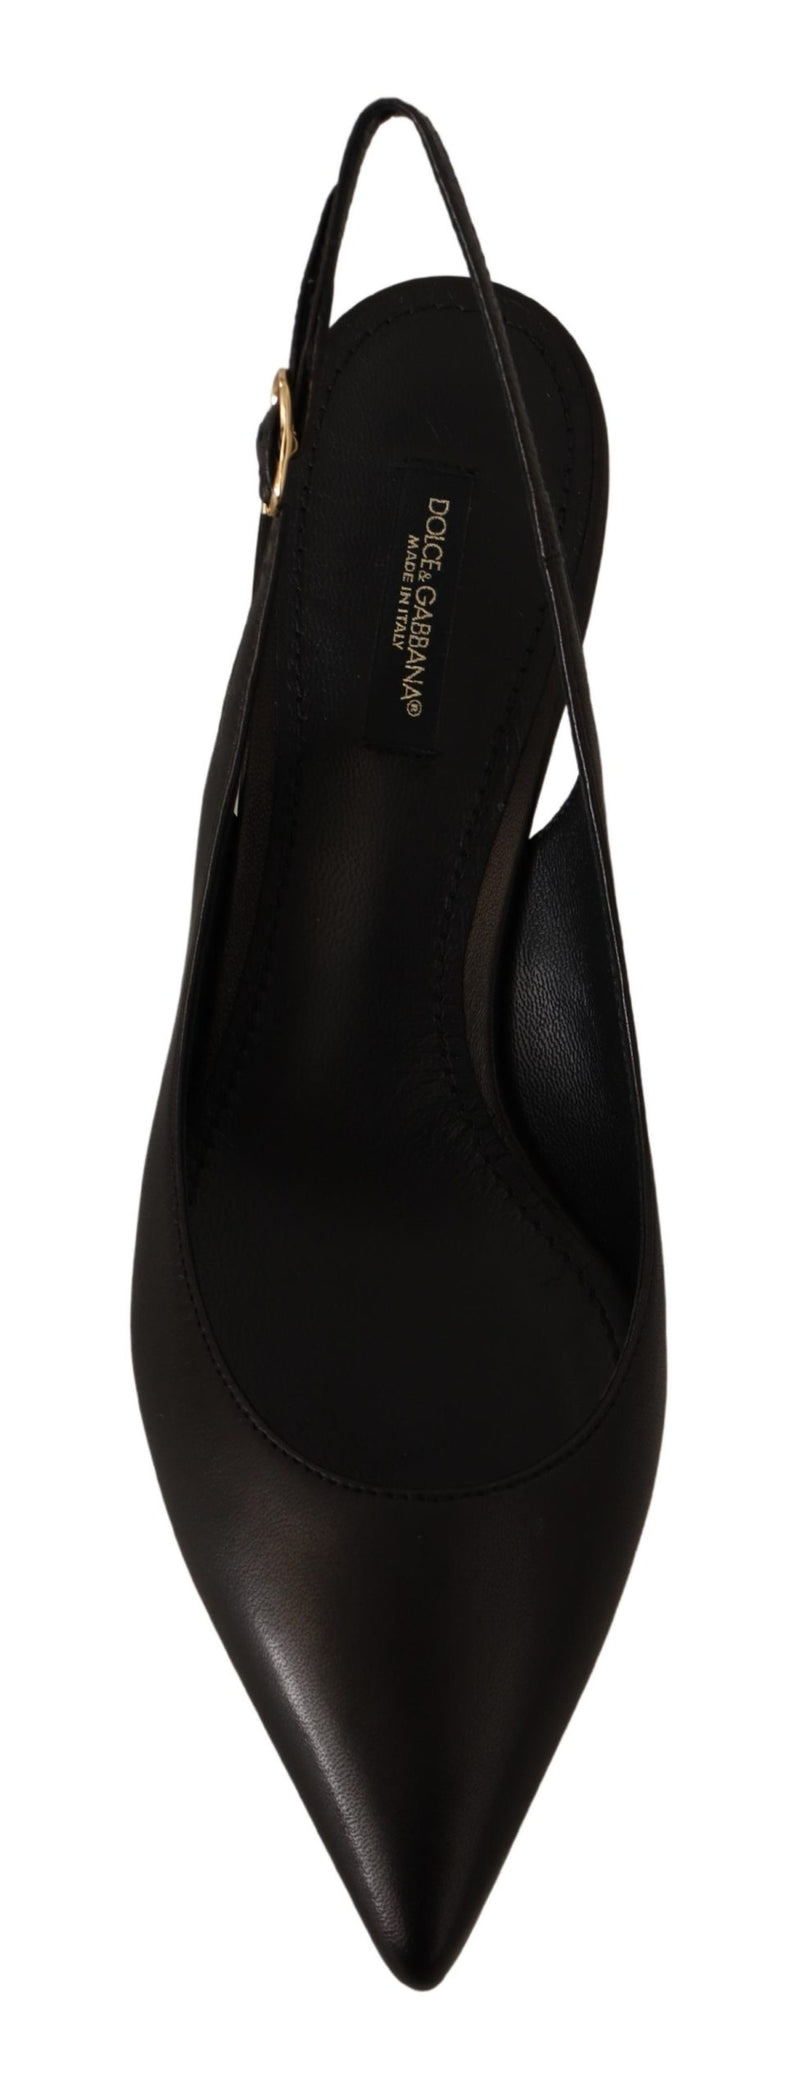 Black Leather Slingbacks Heels Pumps Shoes